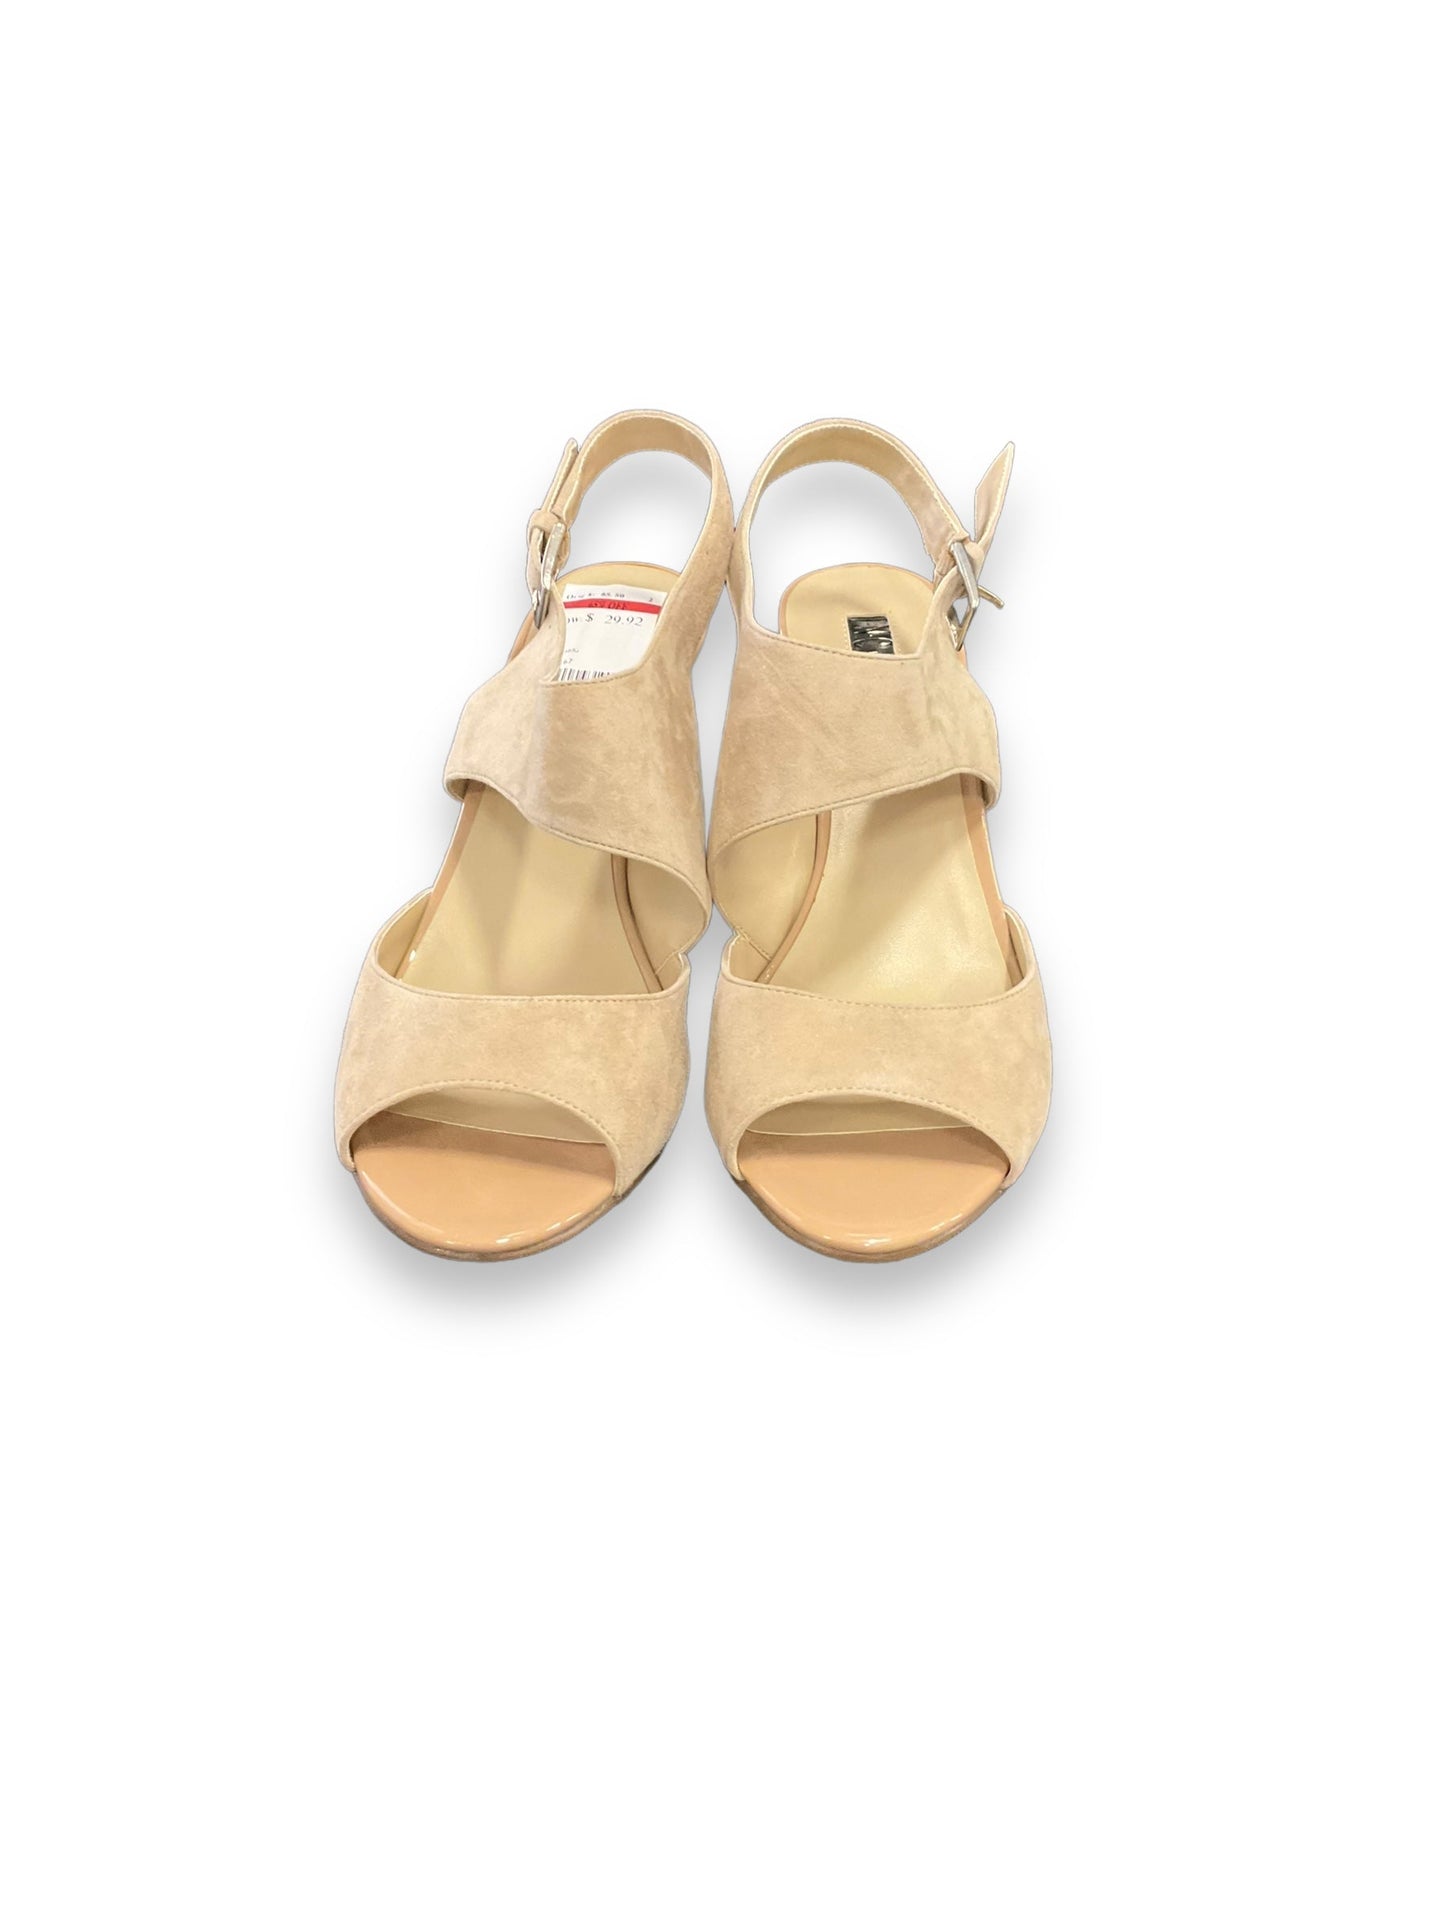 Beige Sandals Heels Platform Inc, Size 8.5